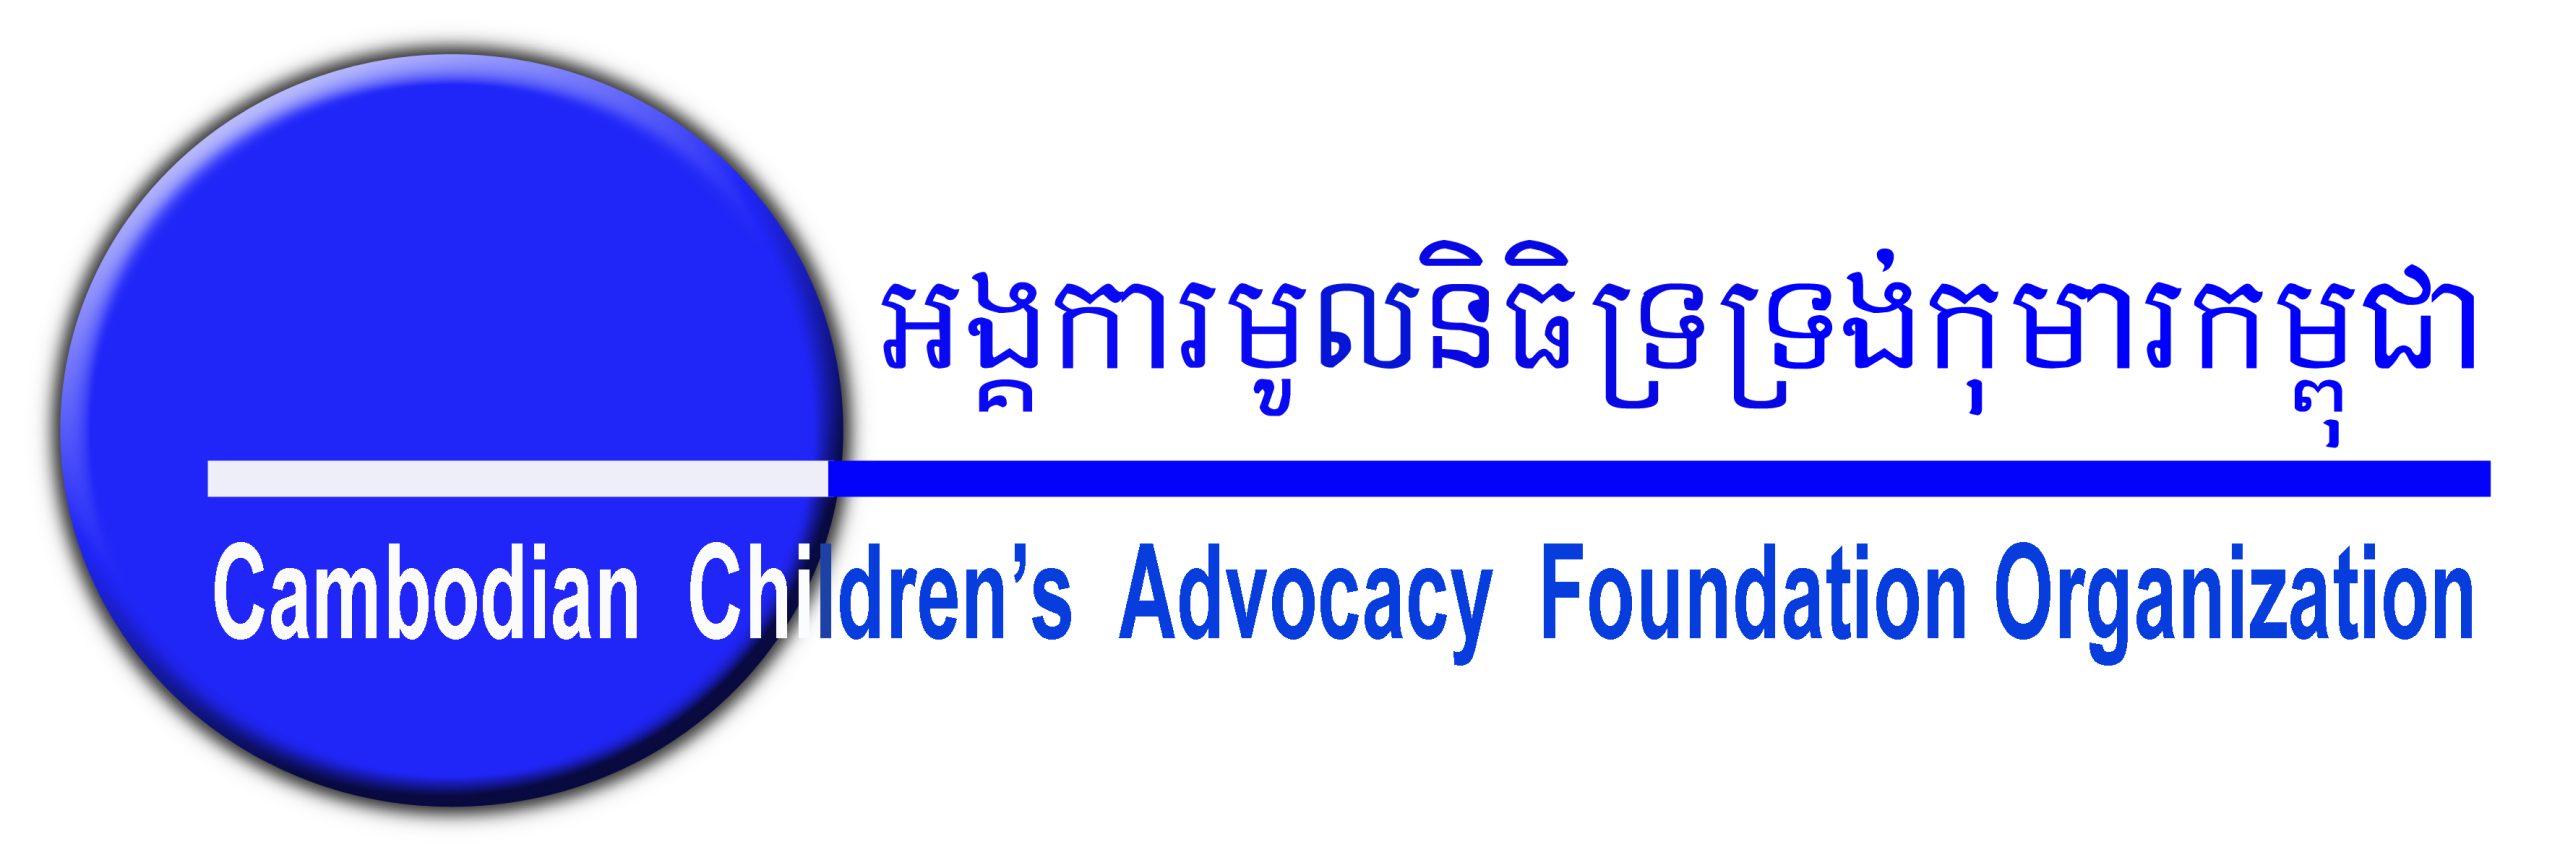 Cambodian Children's Advocacy Foundation Organization